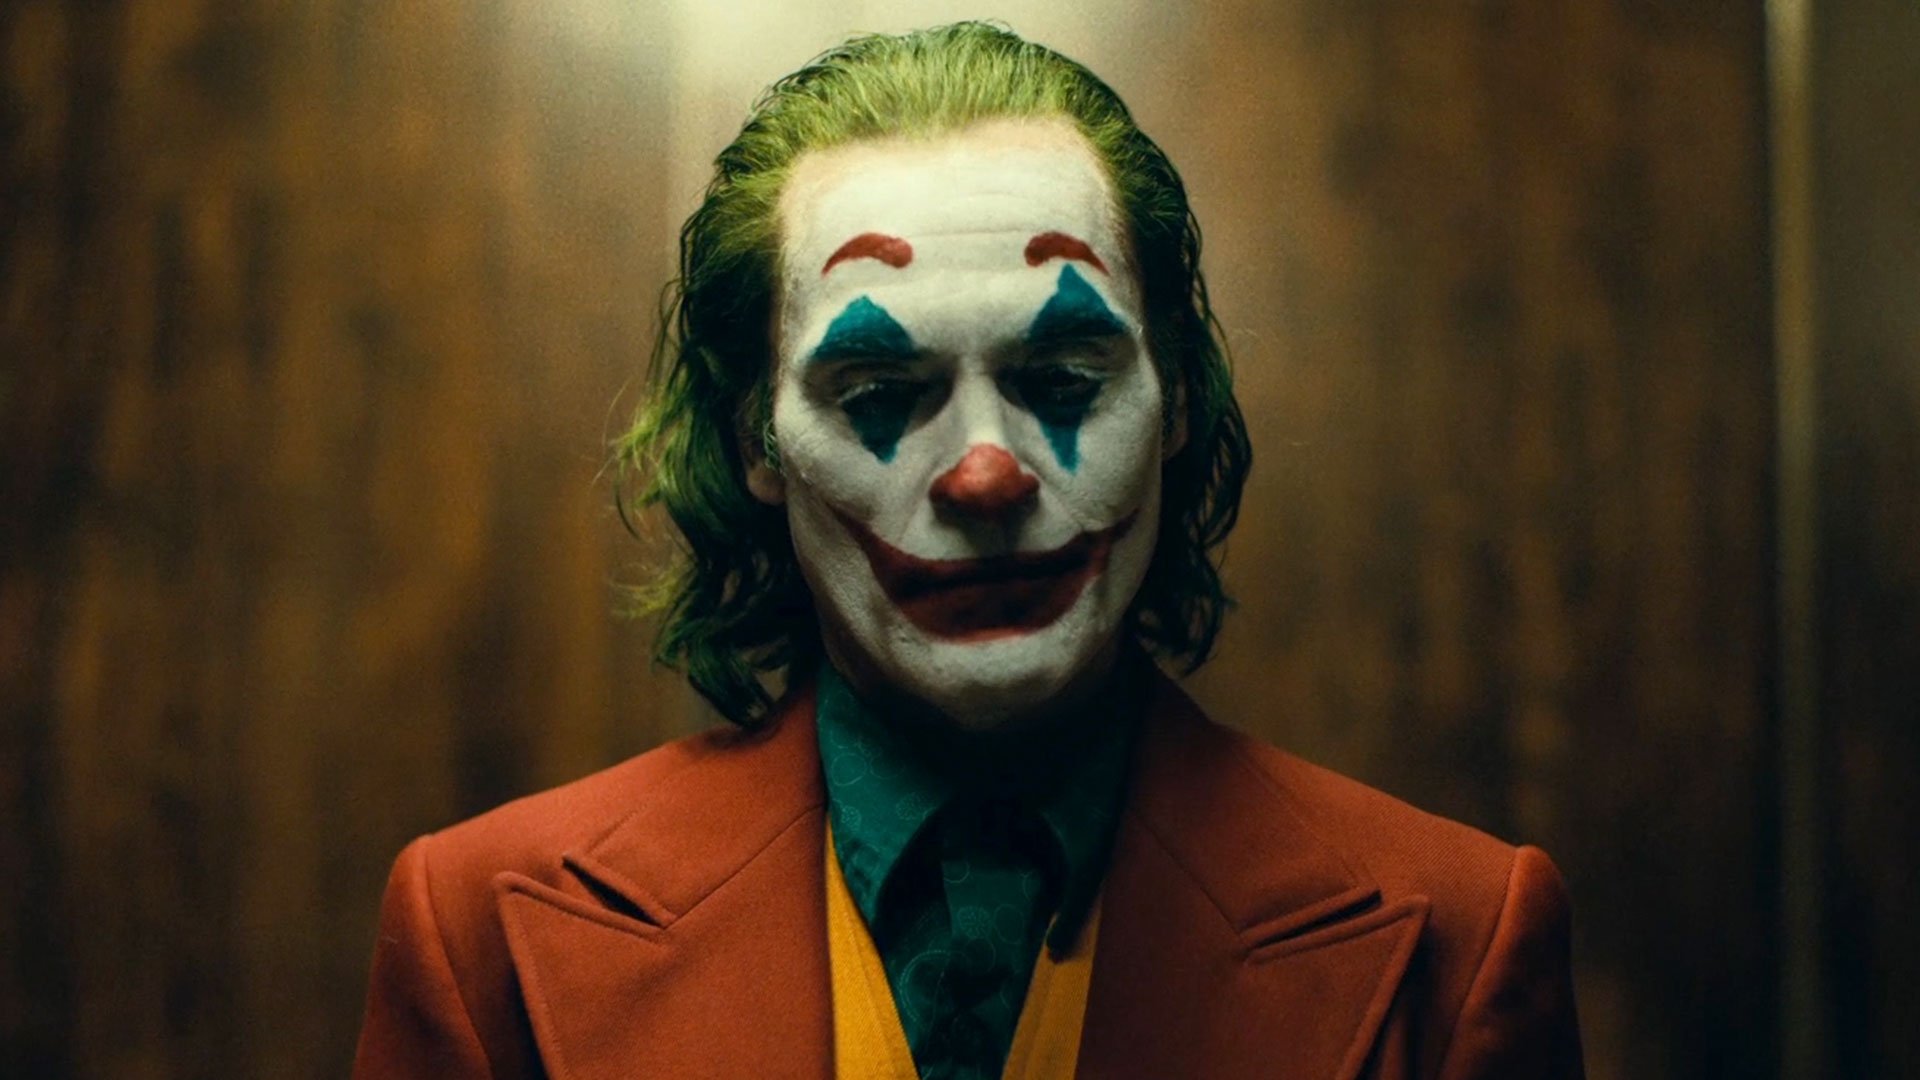 Sekuel Joker semuanya dikonfirmasi oleh Todd Phillips dan Joaquin Phoenix